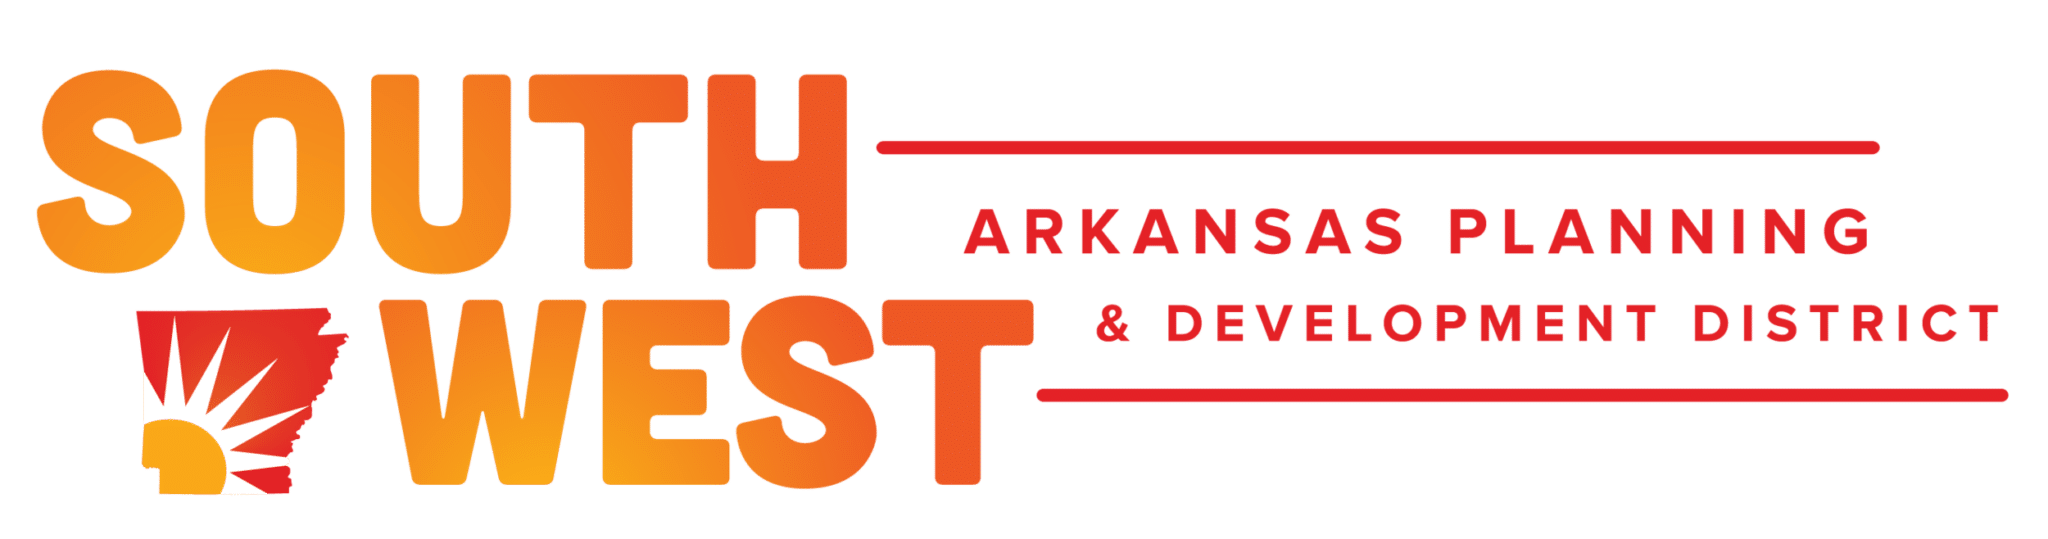 SW Arkansas planning logo